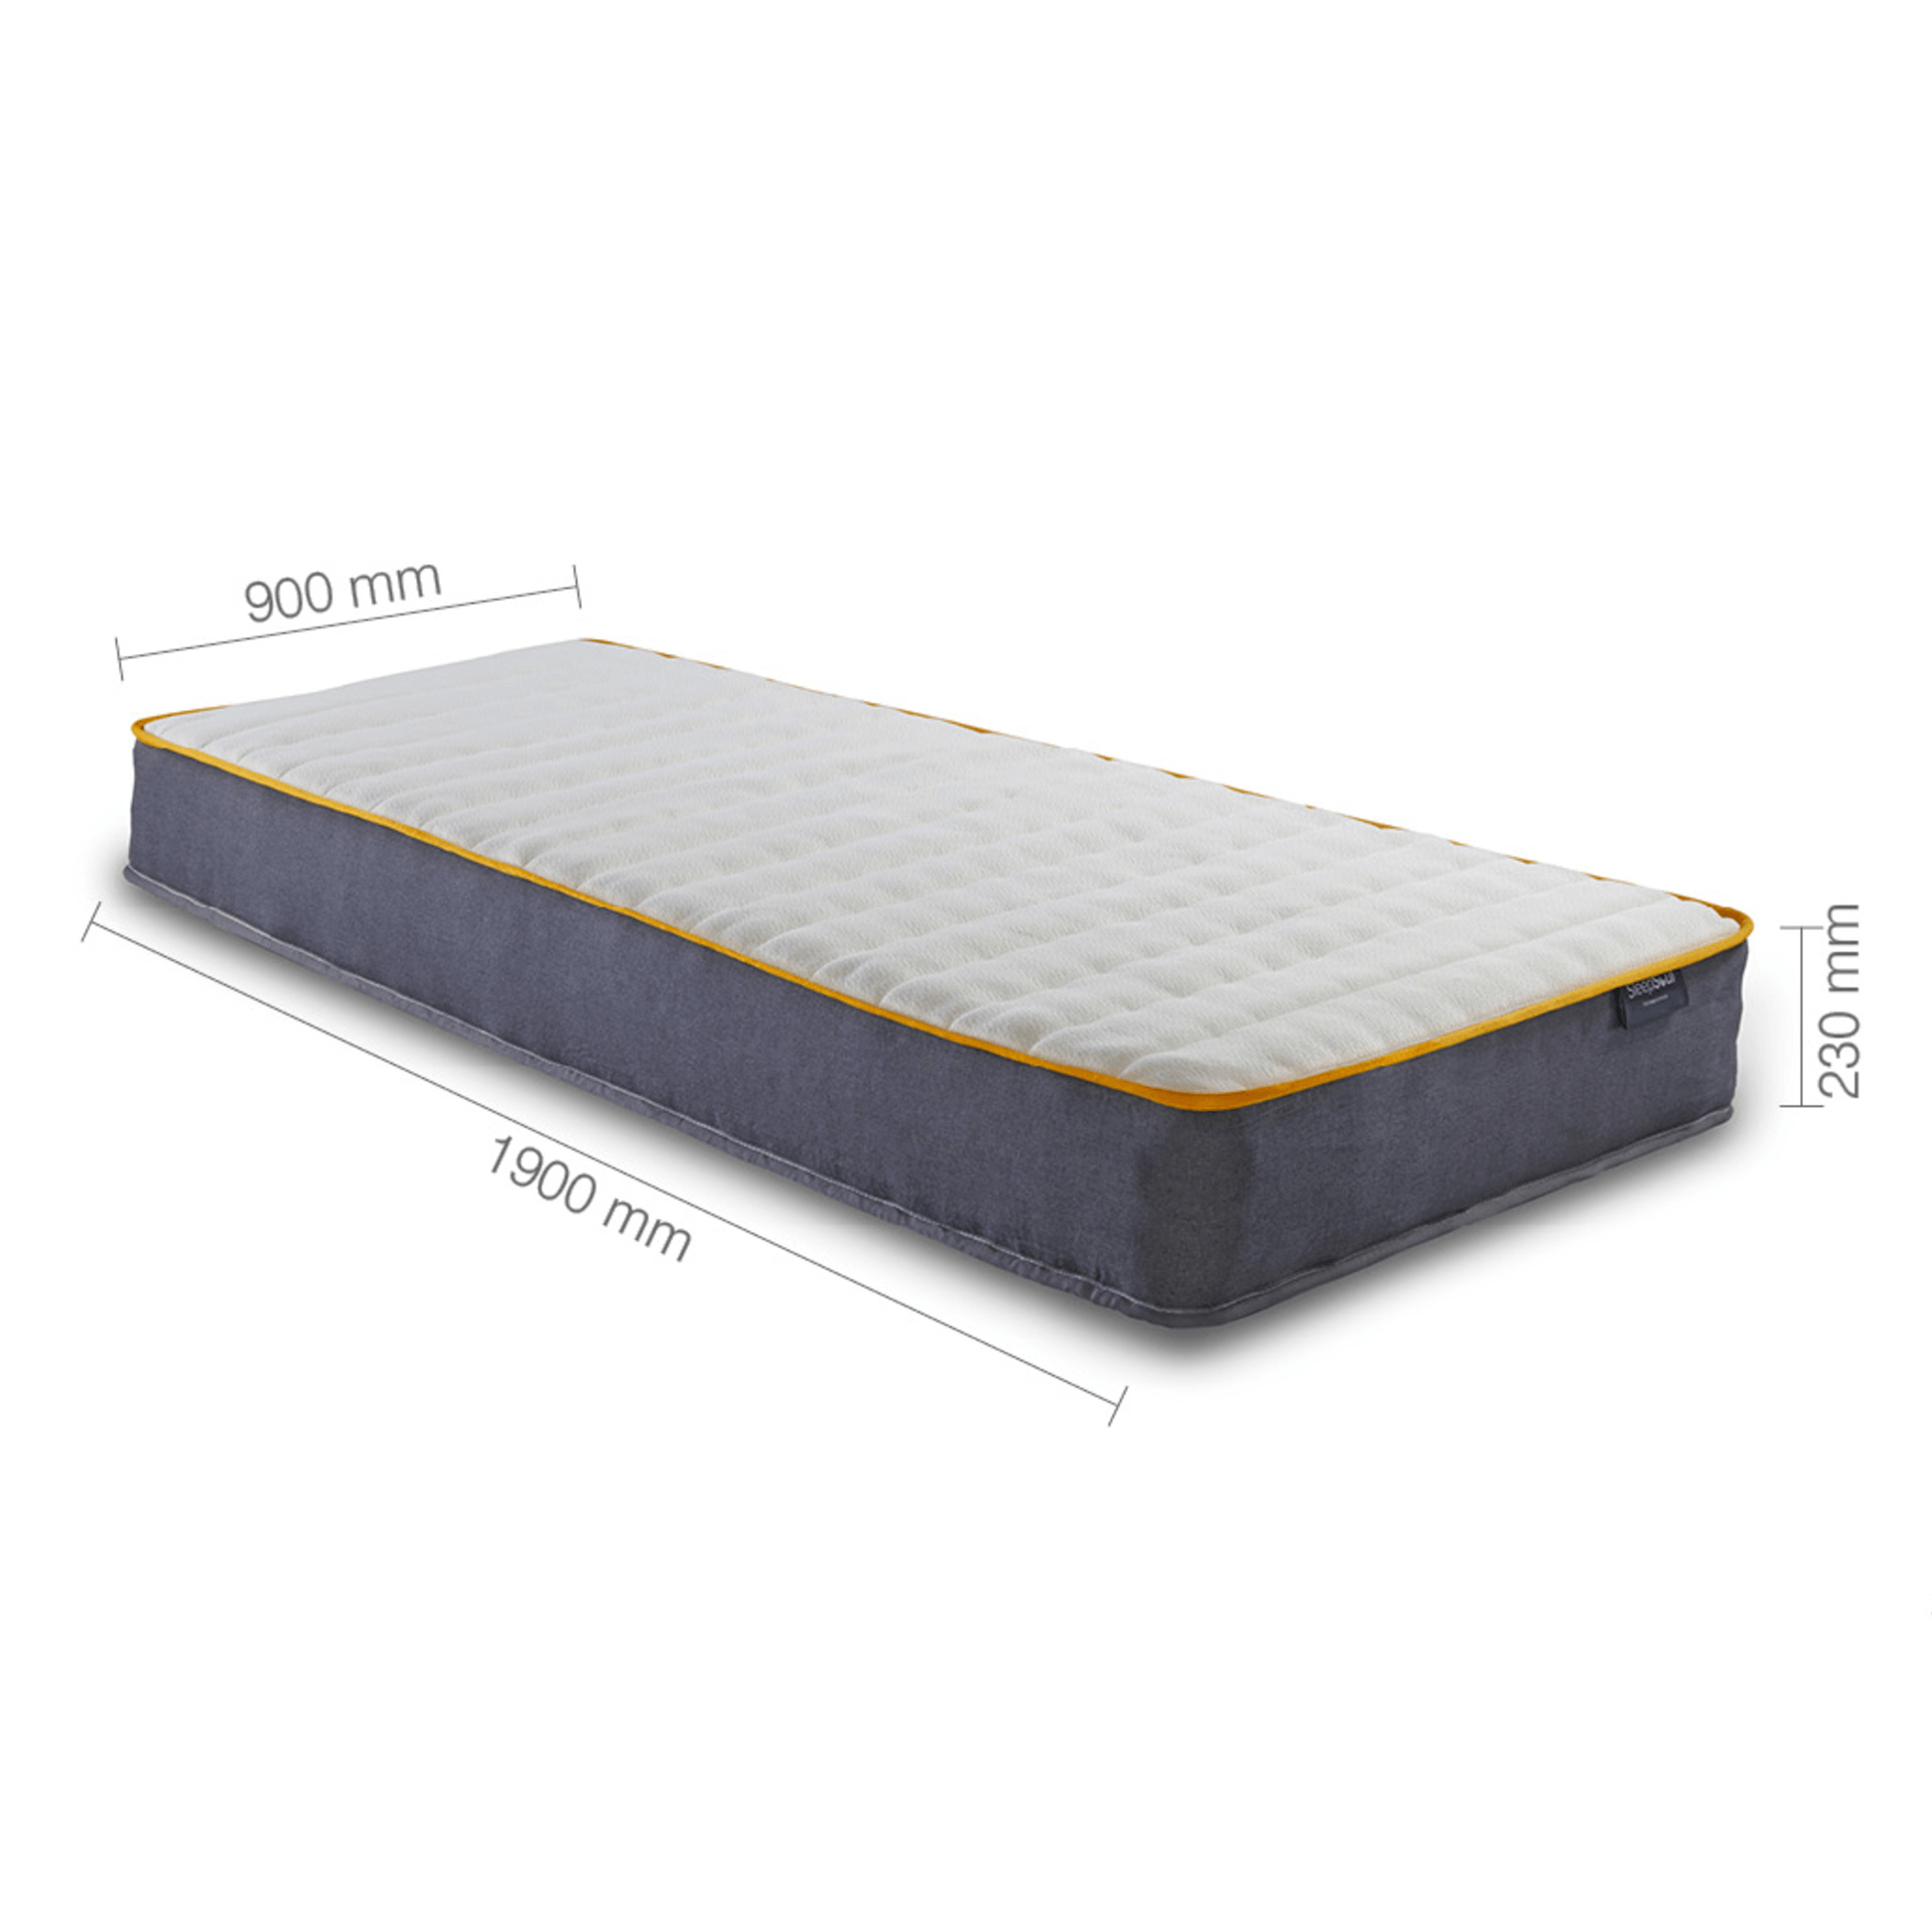 SleepSoul comfort 800 pocket spring standard single mattress dimensions